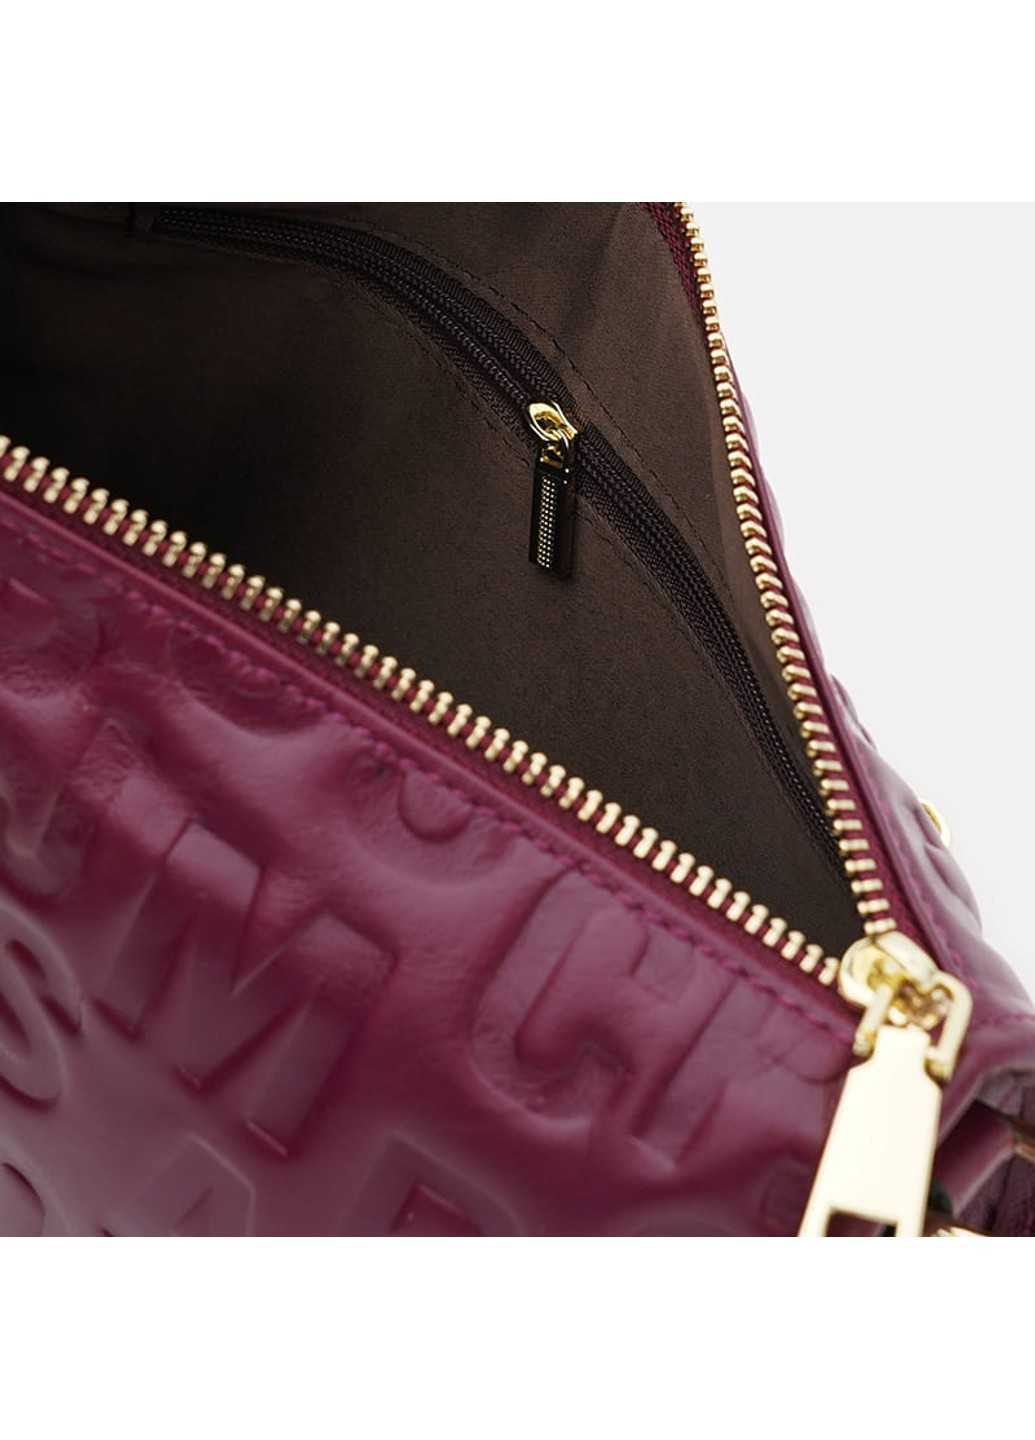 Жіноча шкіряна сумка K19063v-violet Keizer (274535888)